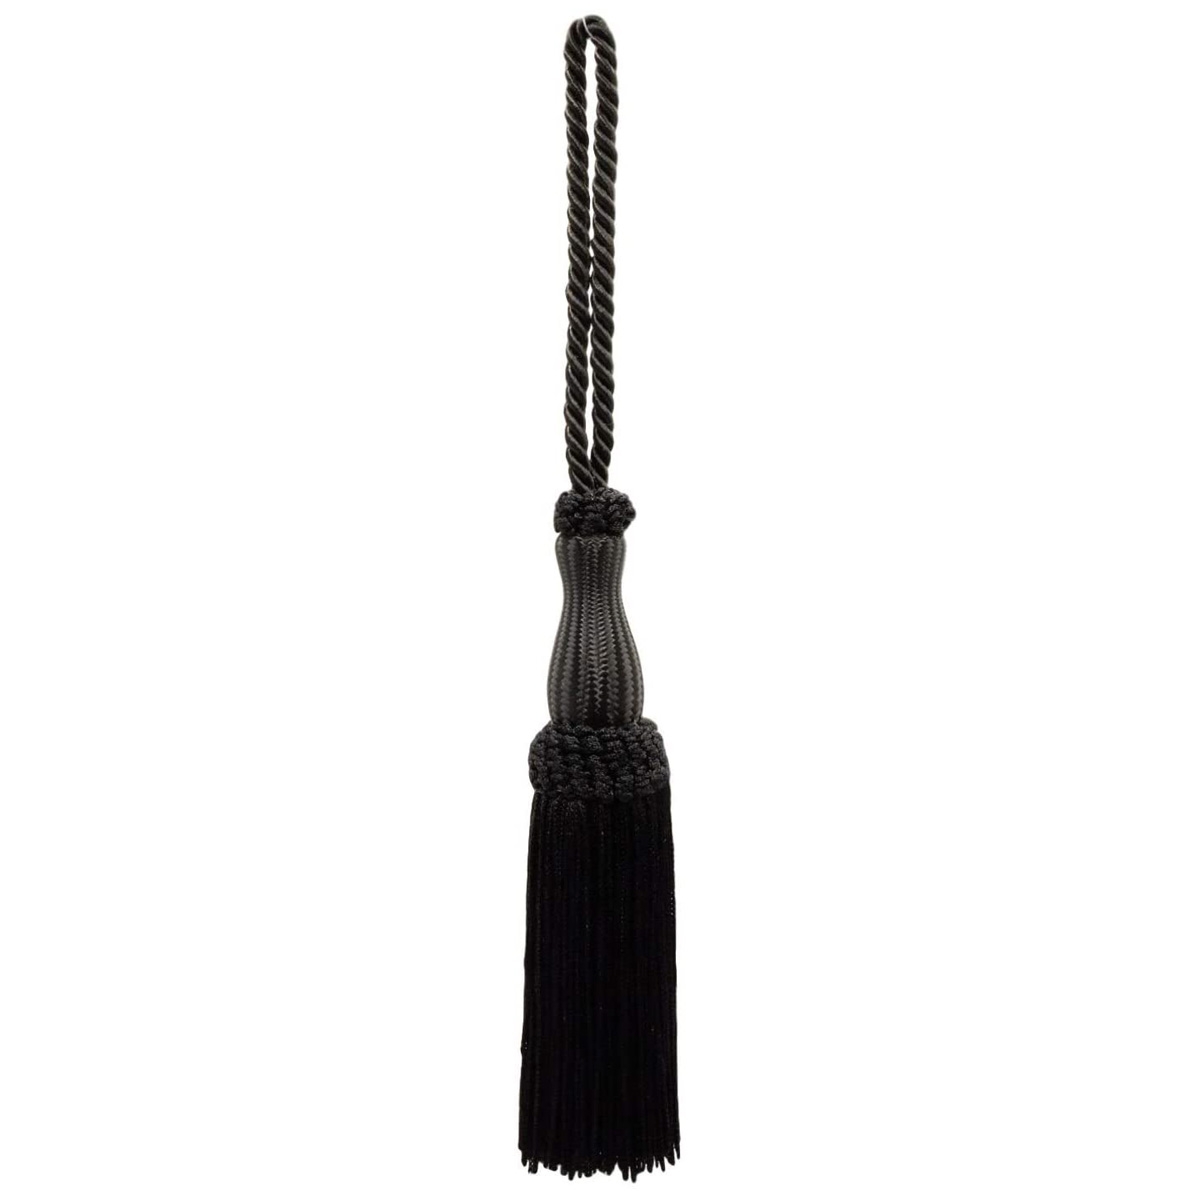 Beautiful Black Chainette Key Tassel, 5 inch Tassel Length, 5 Inch Loop, Color black